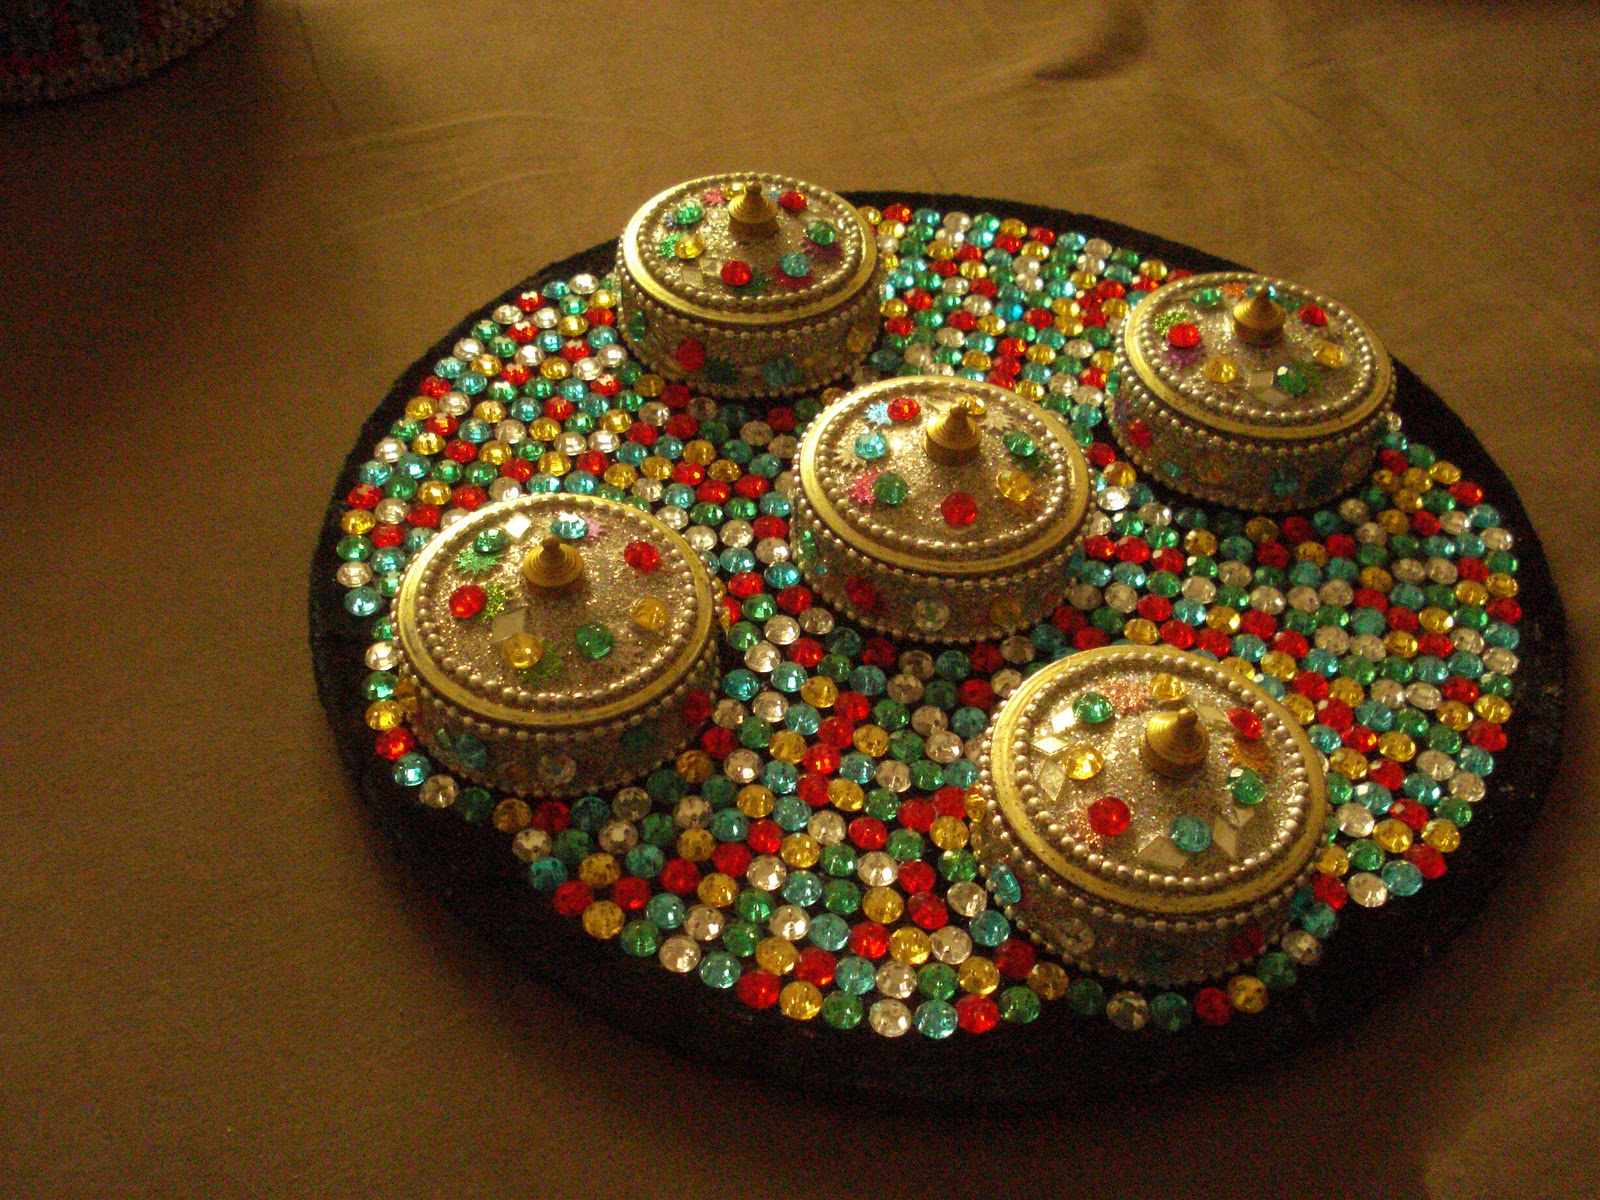 Indian Handmade Items: Accessories box